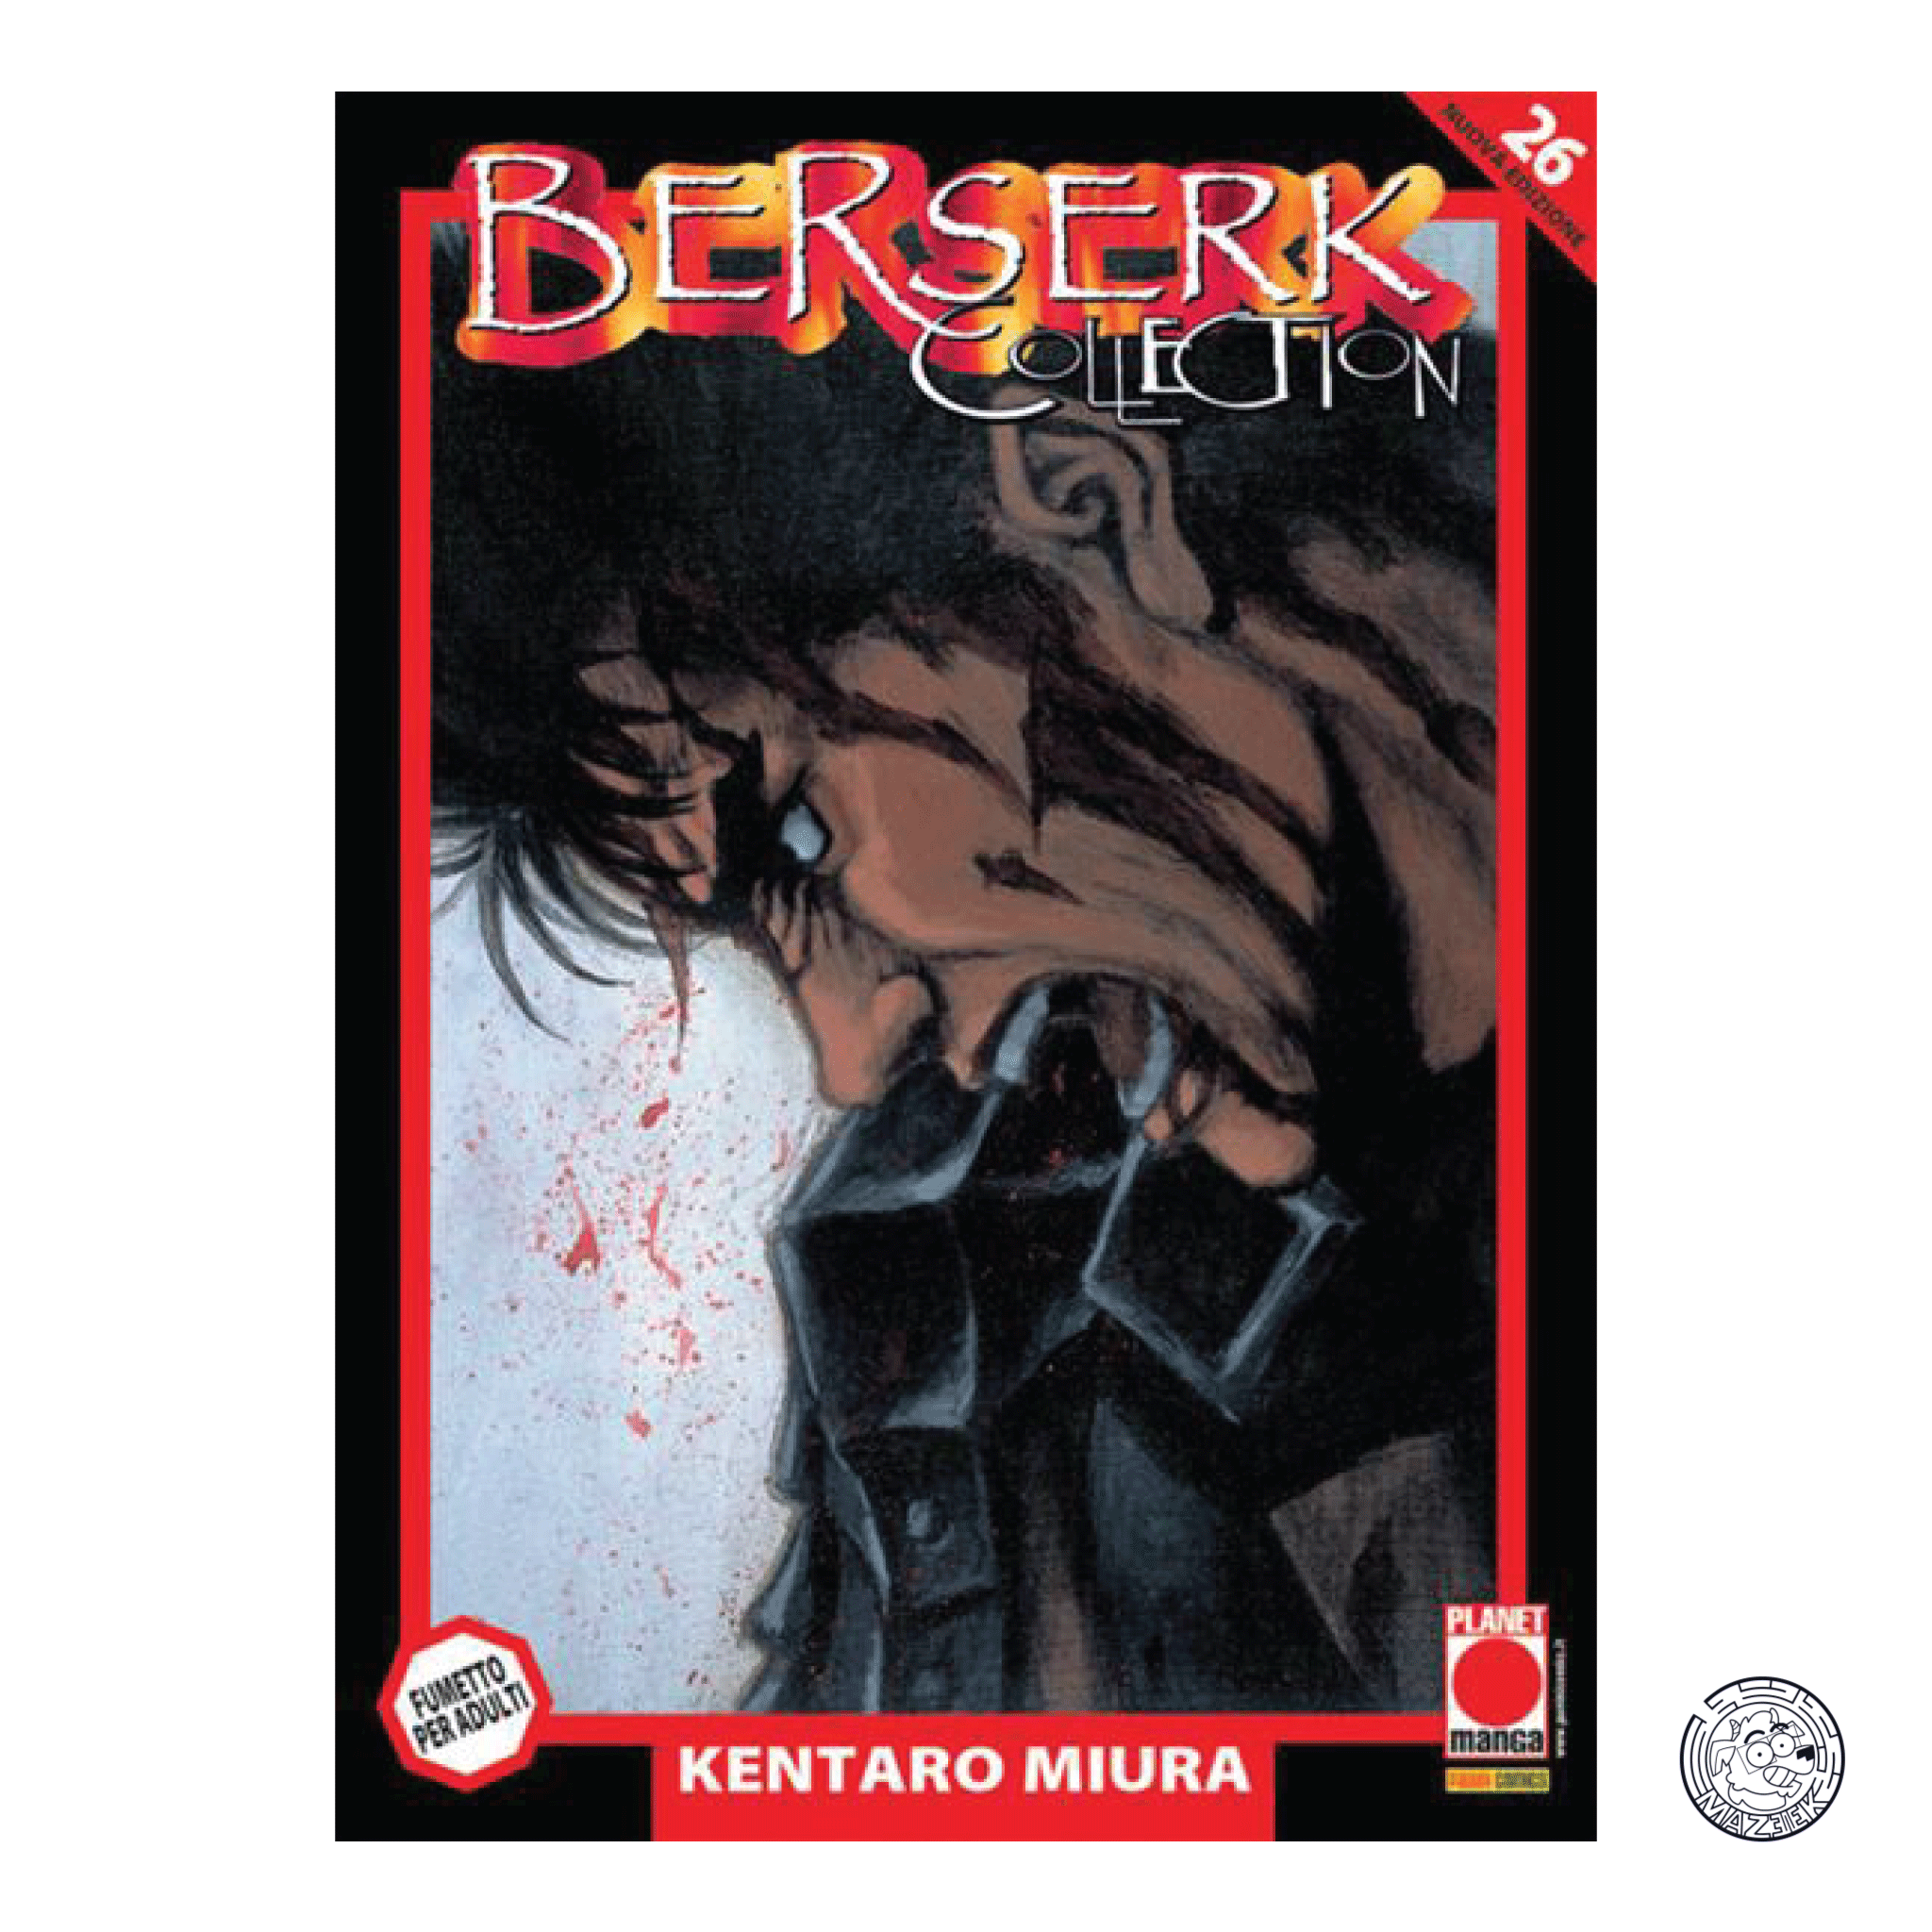 Berserk Collection Black Series 26 - Reprint 3